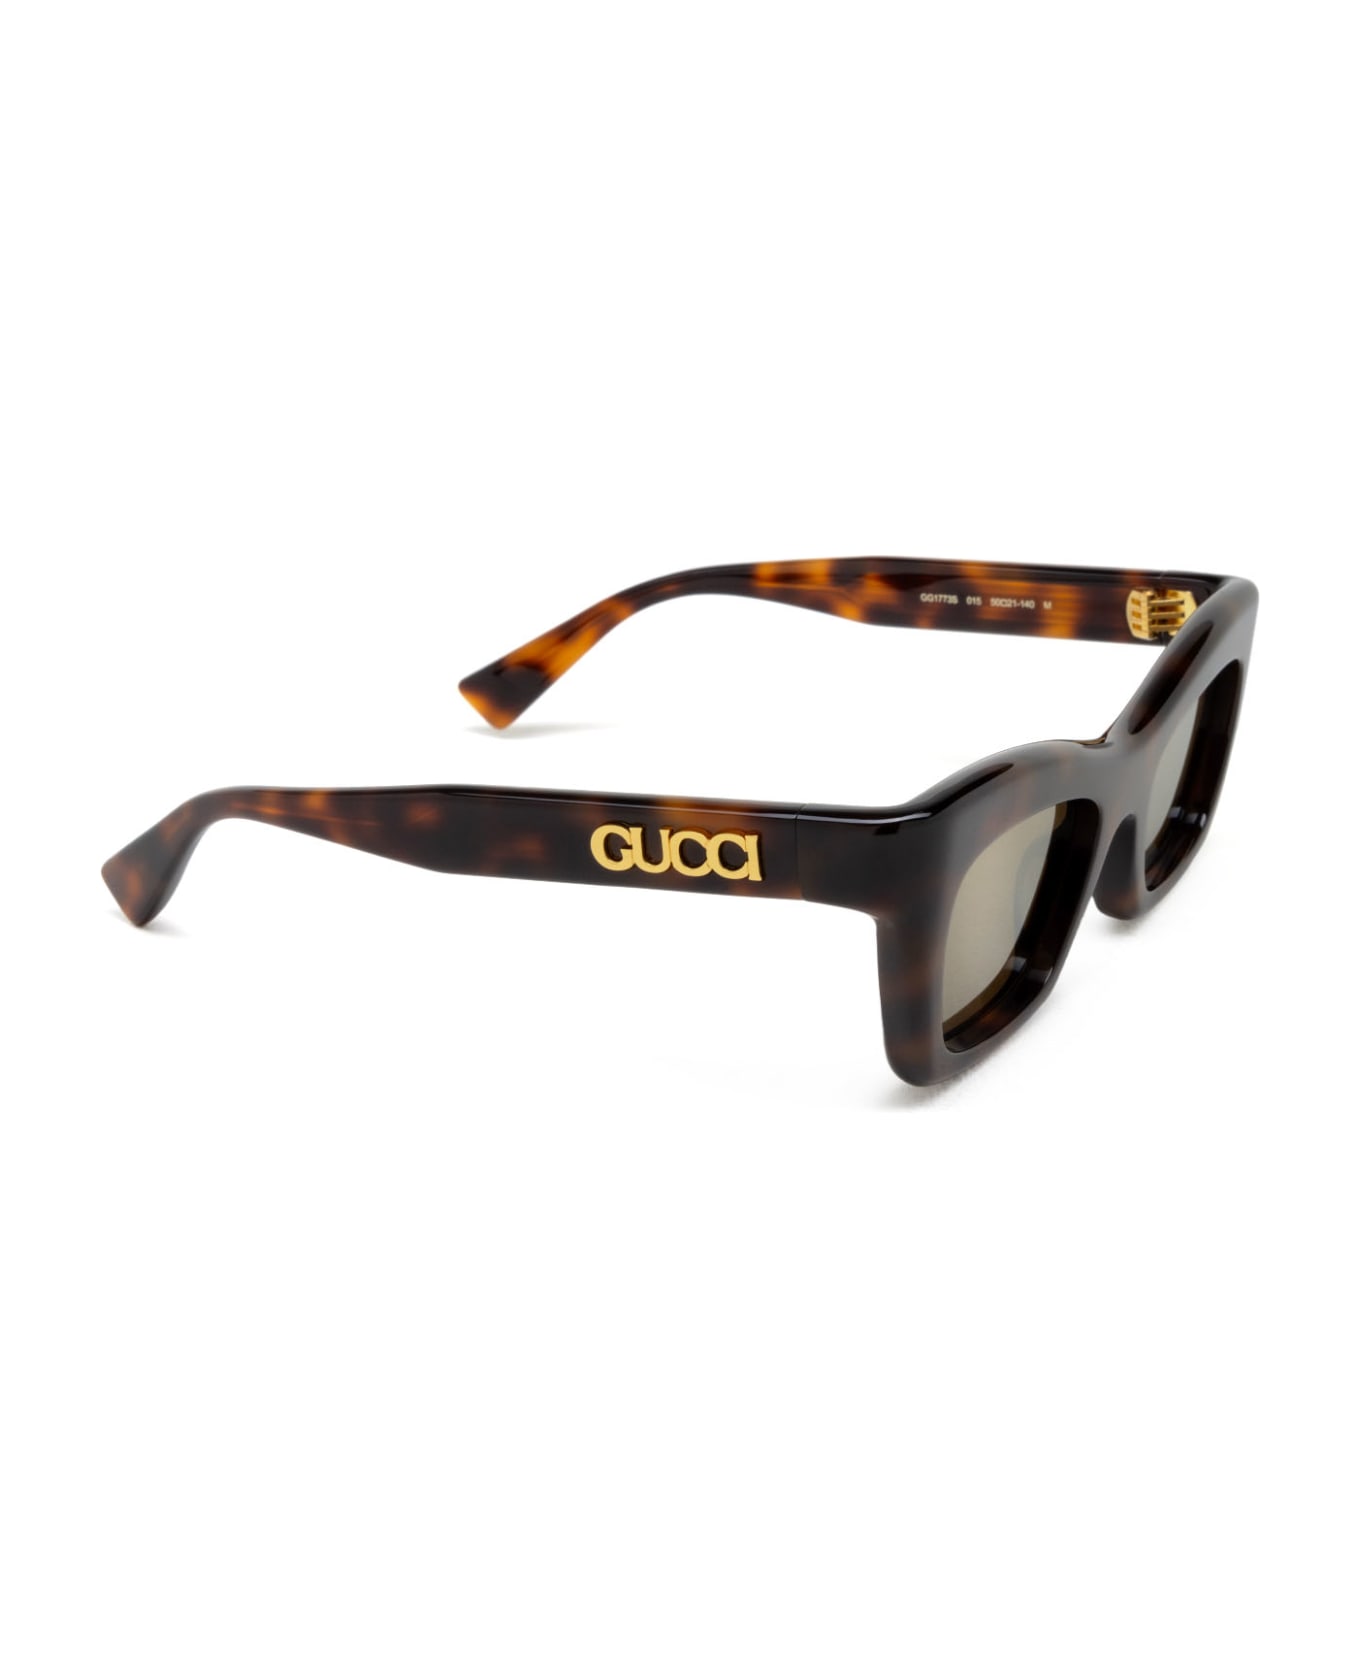 Gucci Eyewear Gg1773s Havana Sunglasses - Havana